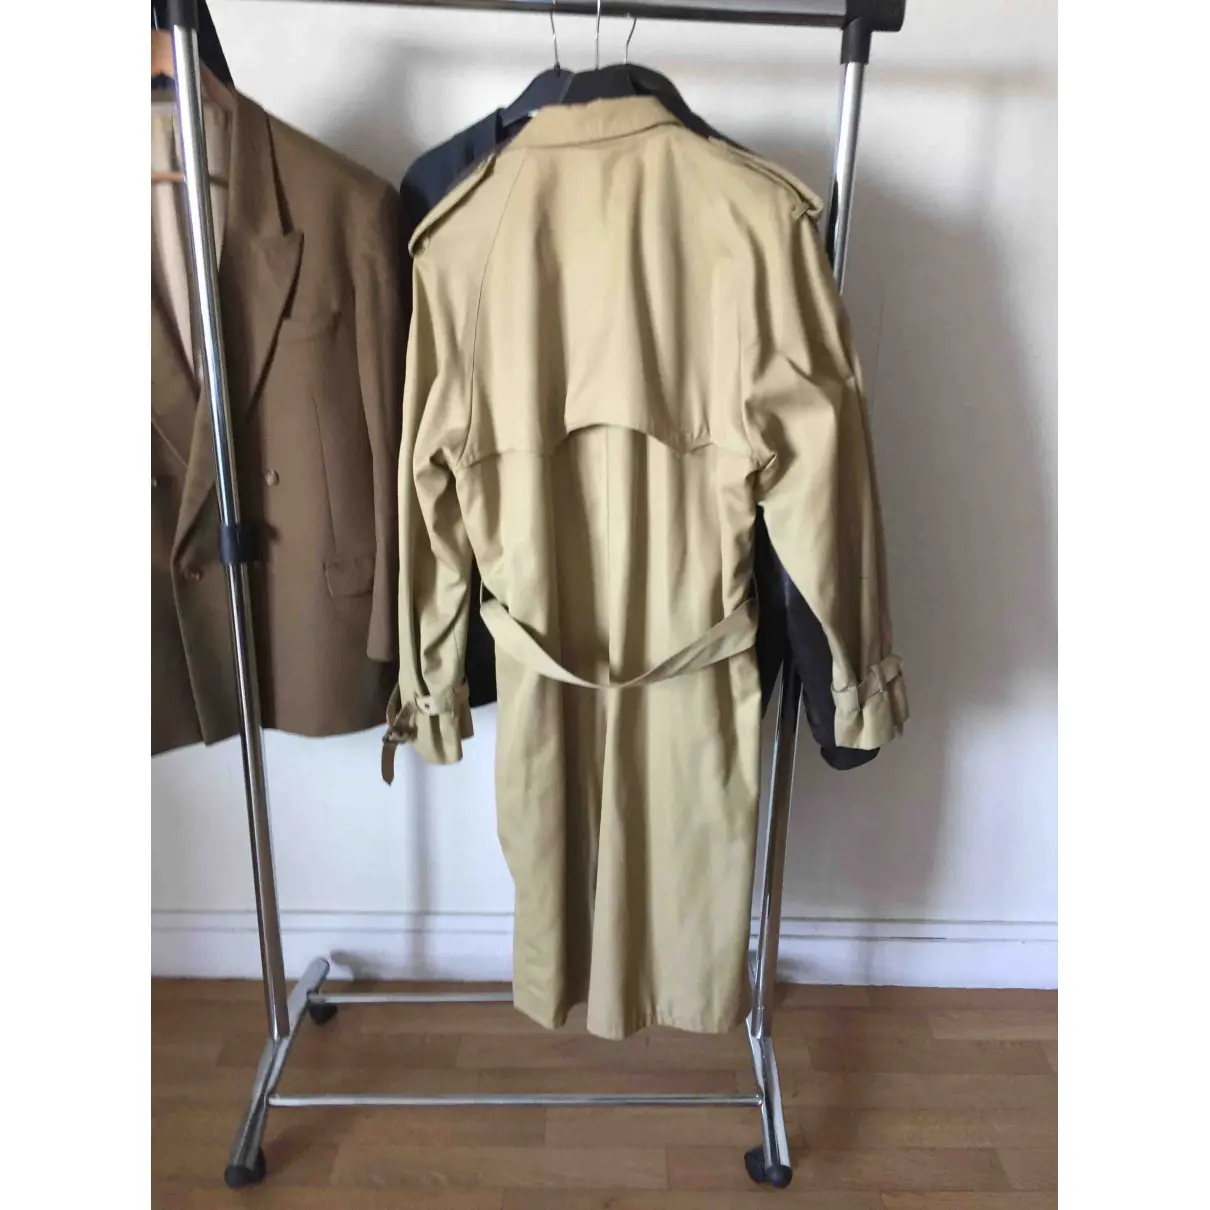 Buy Yves Saint Laurent Cloth trench online - Vintage